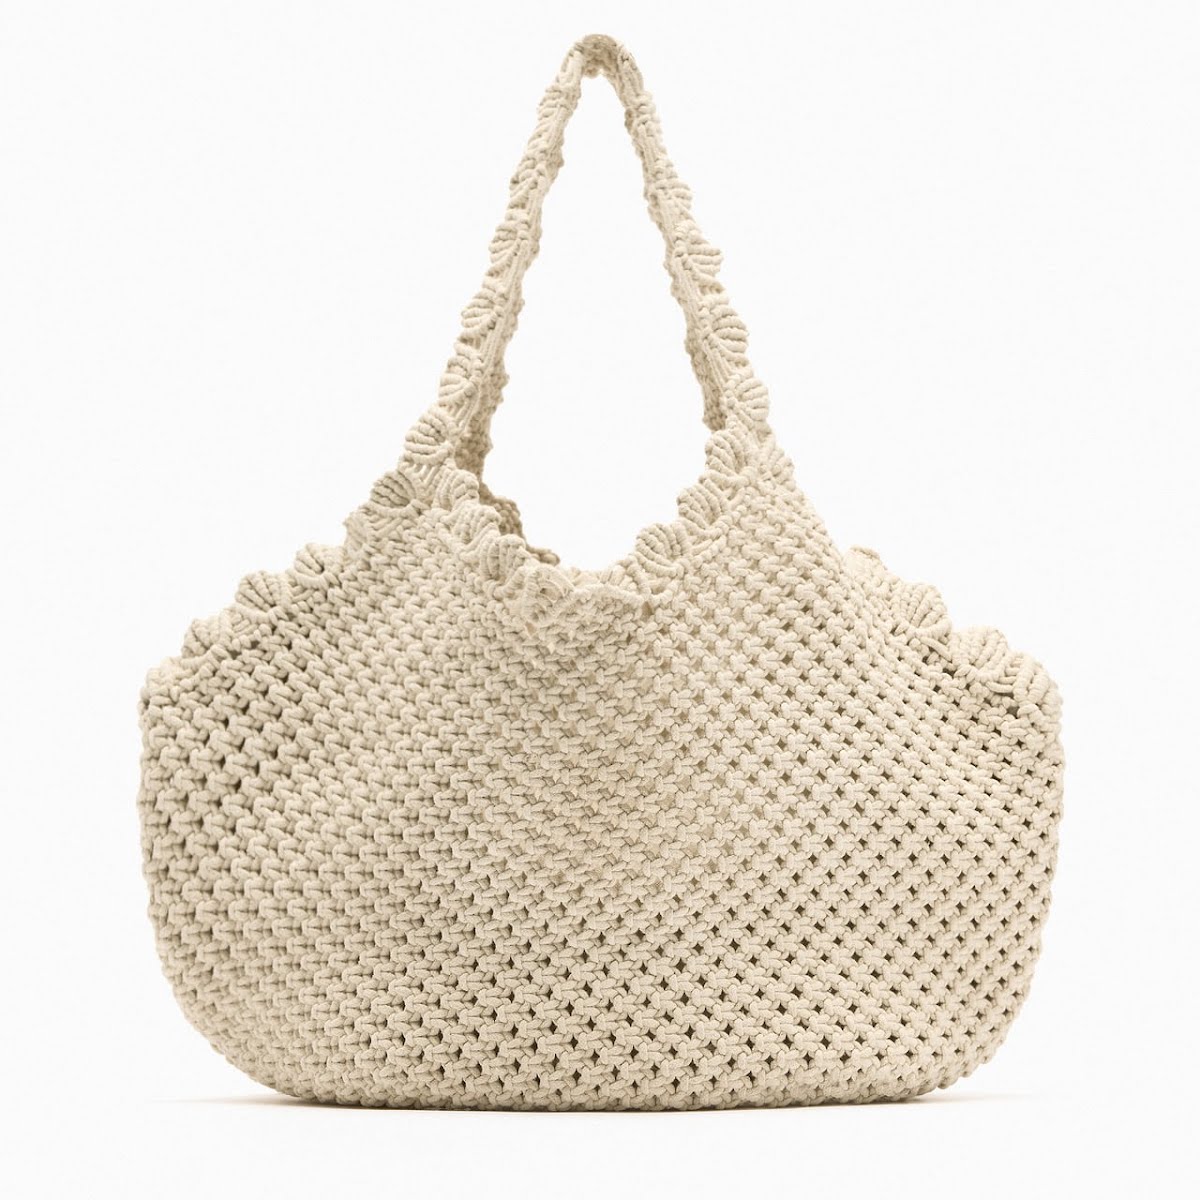 Zara, Macramé Tote Bag, €59.99